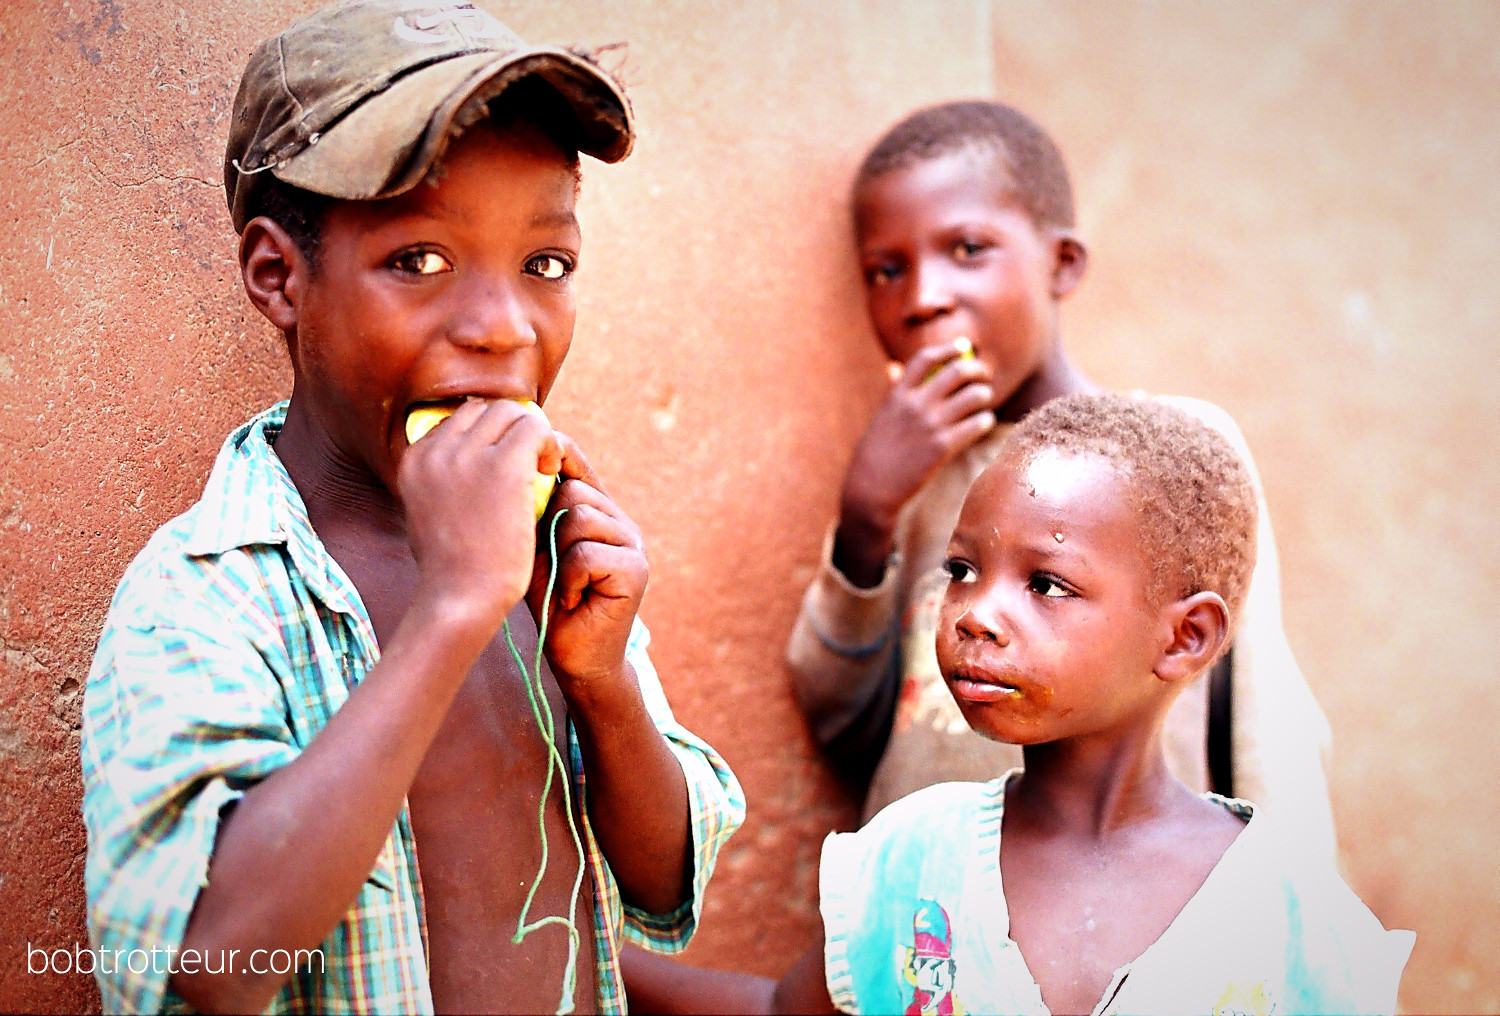 Enfants au Burkina faso destinations en dehors des sentiers battus